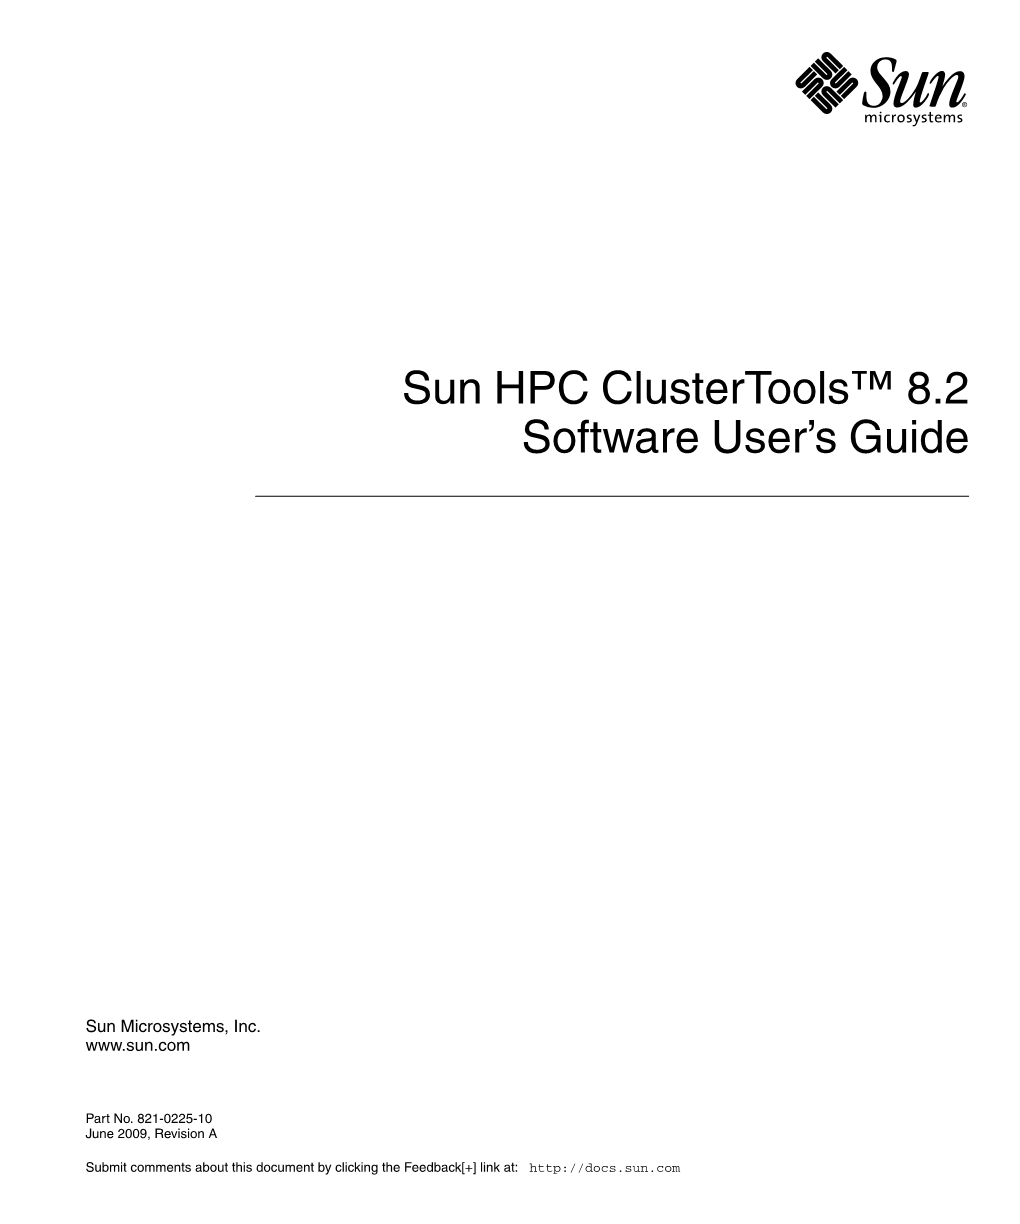 Sun HPC Clustertools 8.2 Software User's Guide